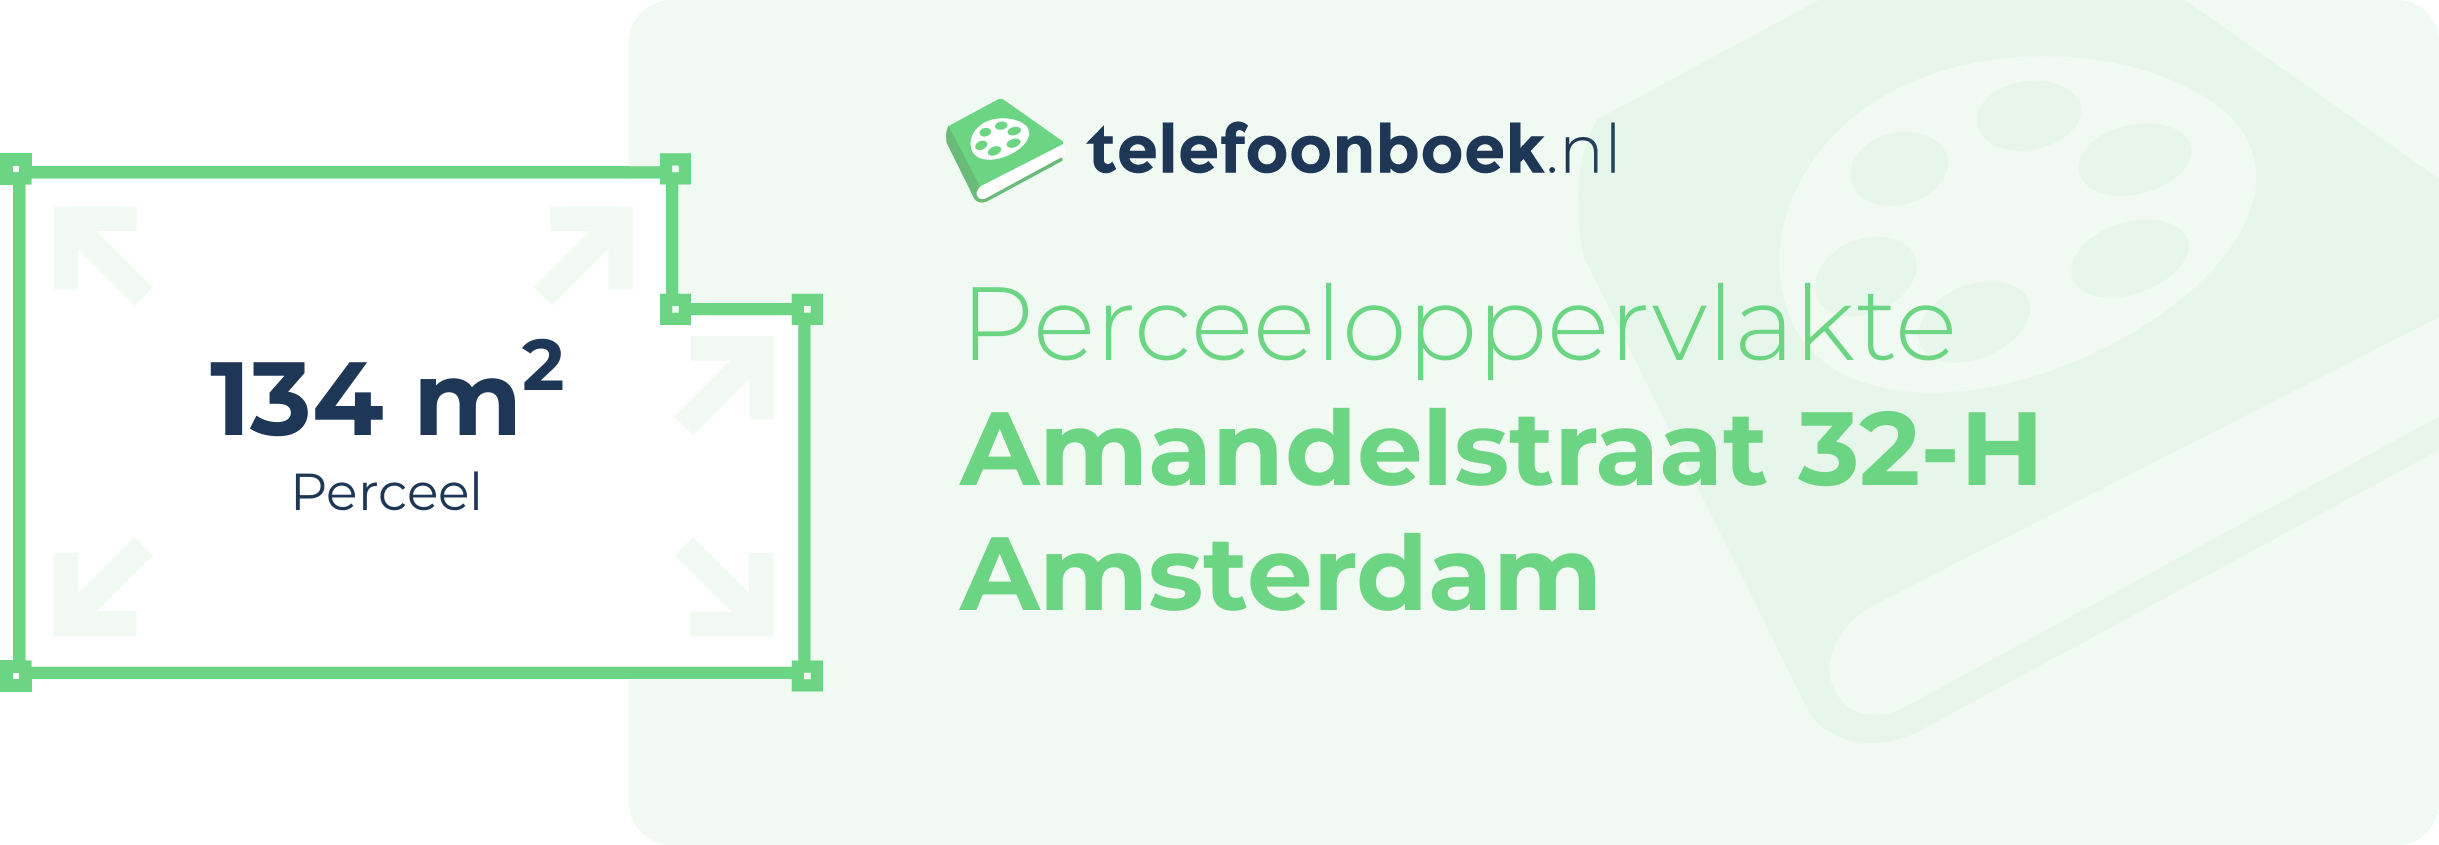 Perceeloppervlakte Amandelstraat 32-H Amsterdam